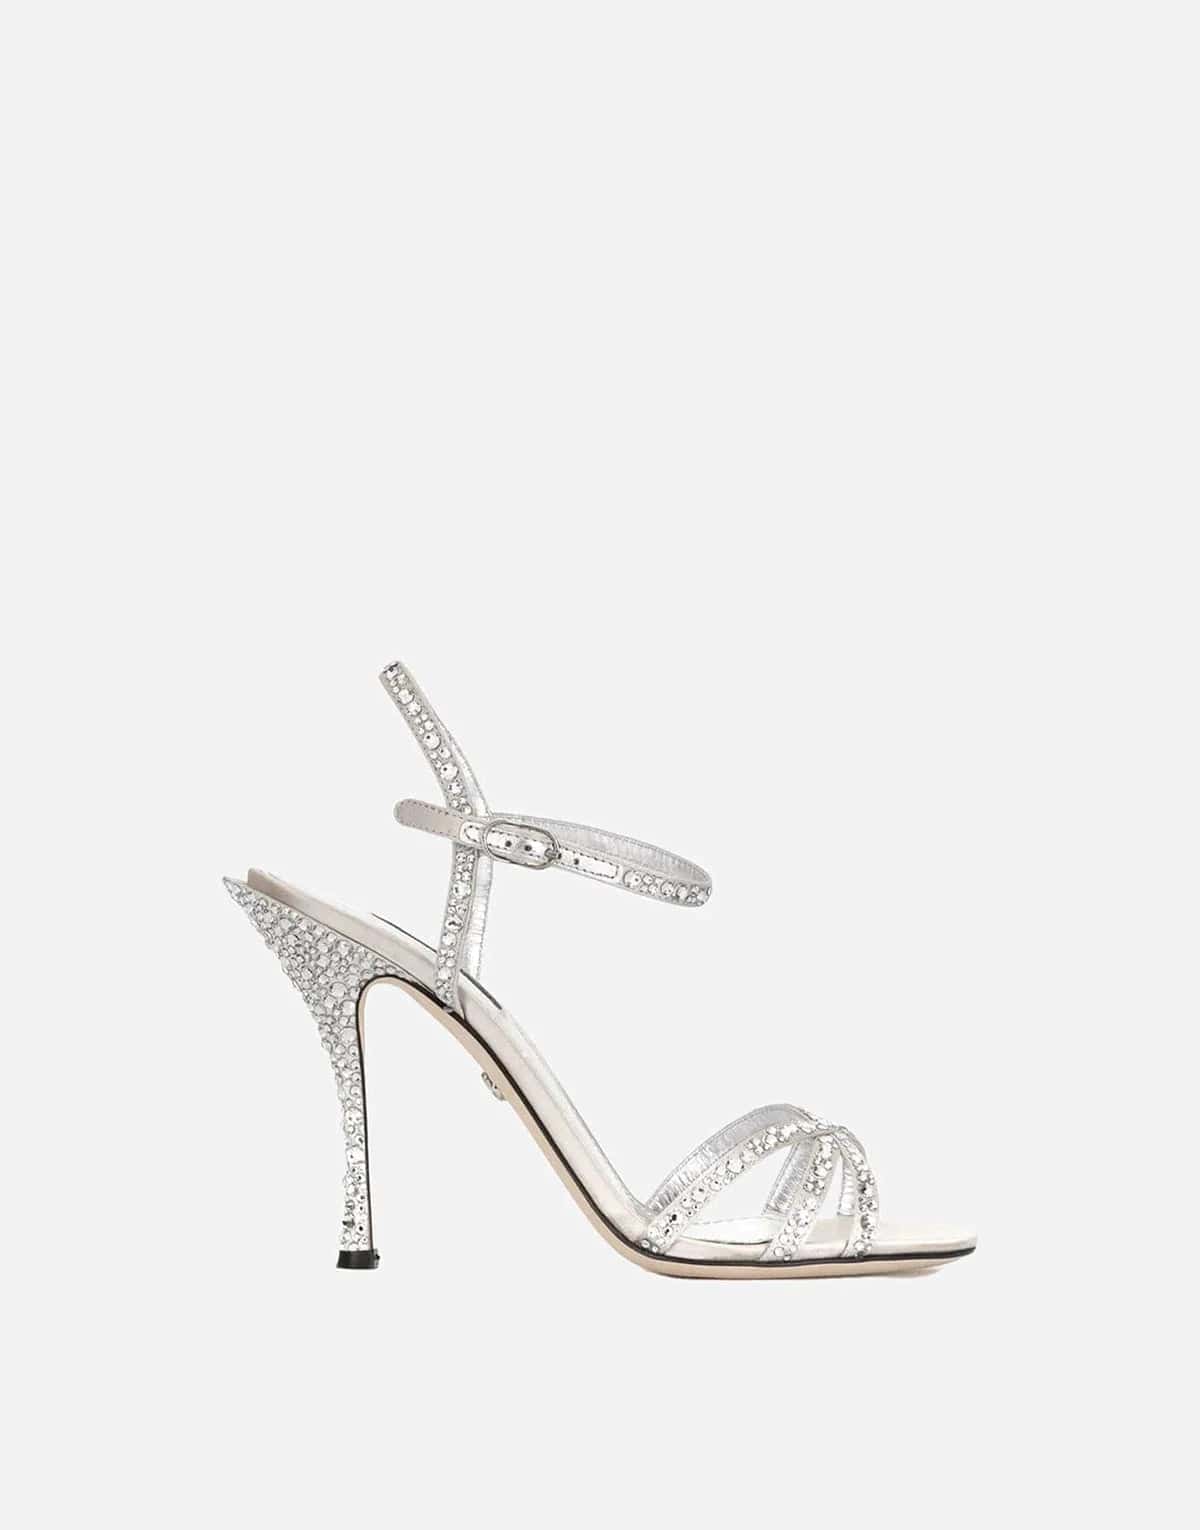 Dolce & Gabbana Sandals With Rhinestone-Embellishments